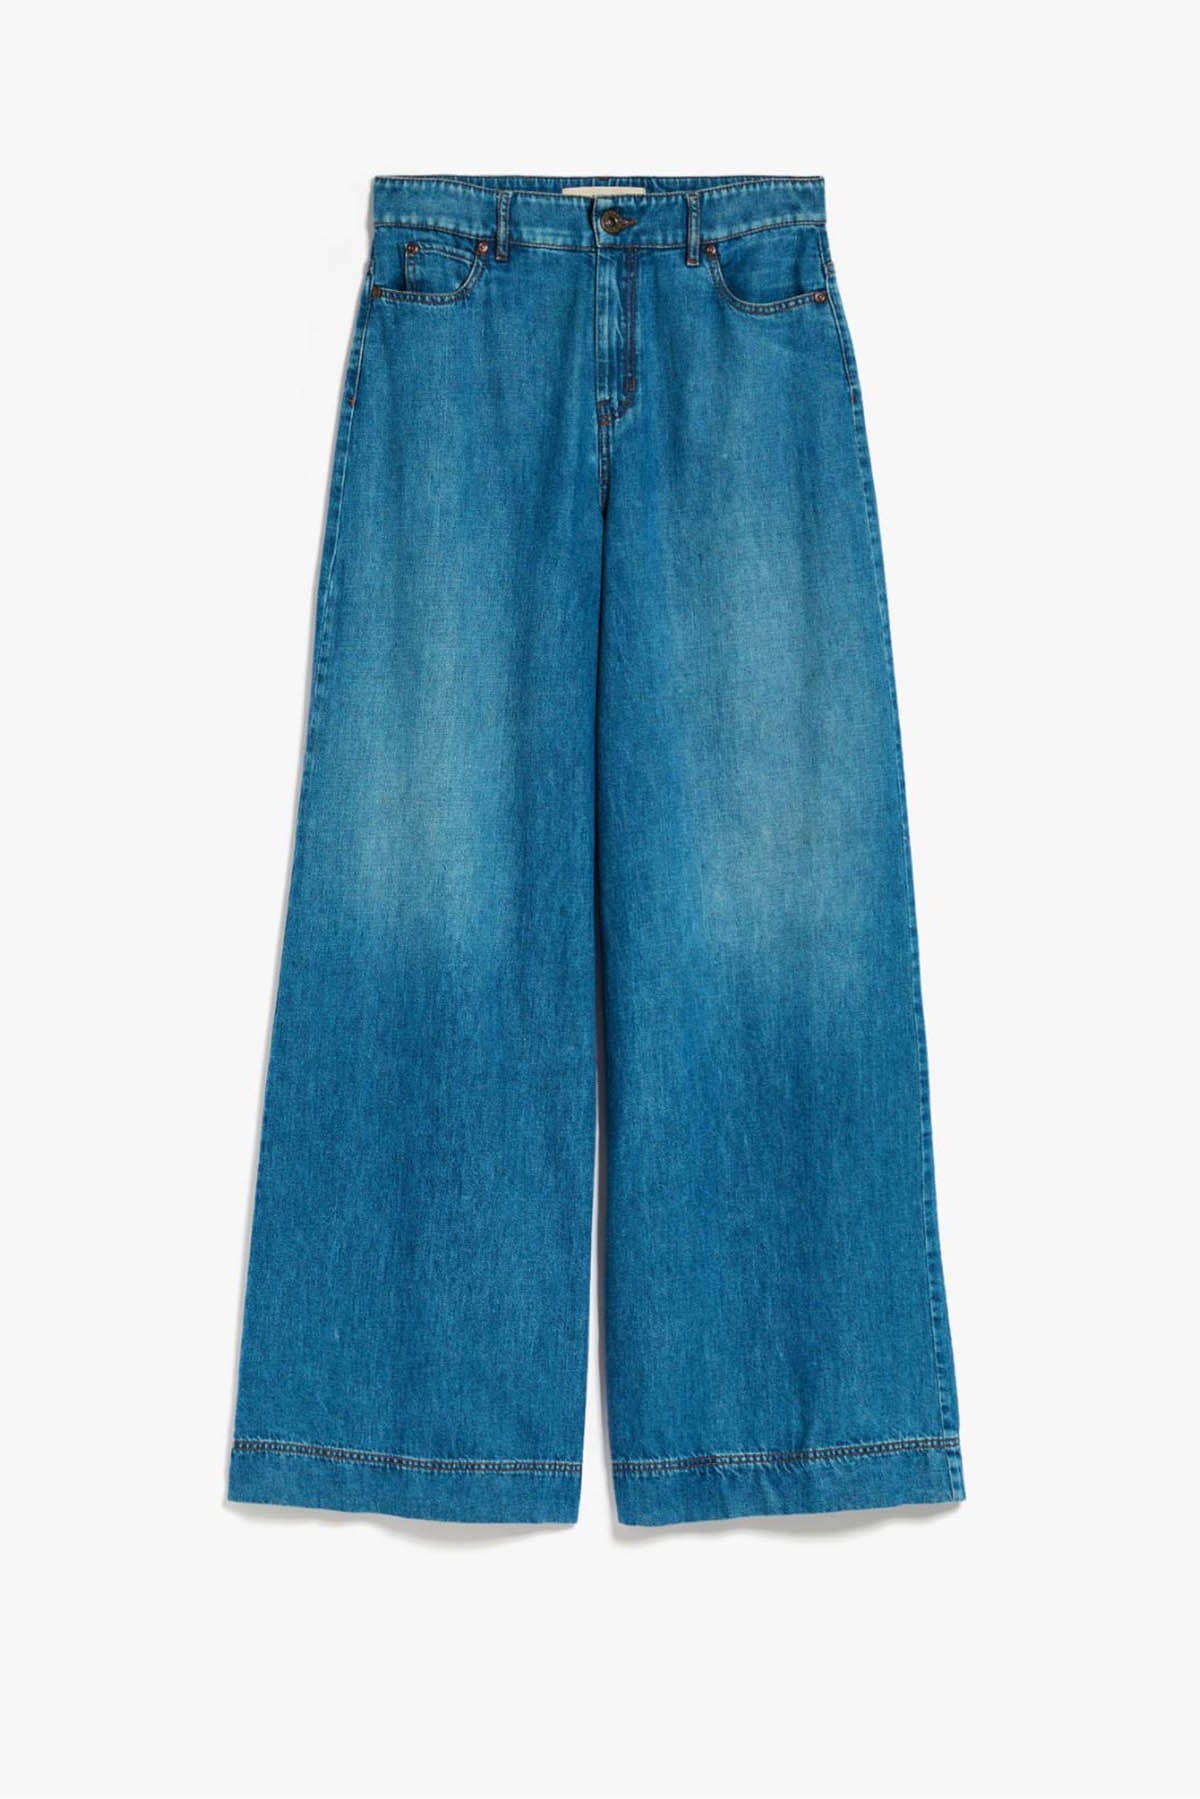 MAXMARA'S BRANDS PANTALONE IN DENIM  BLUE JEANS / 34 Jeans Over Donna Max Mara Weekend Vega